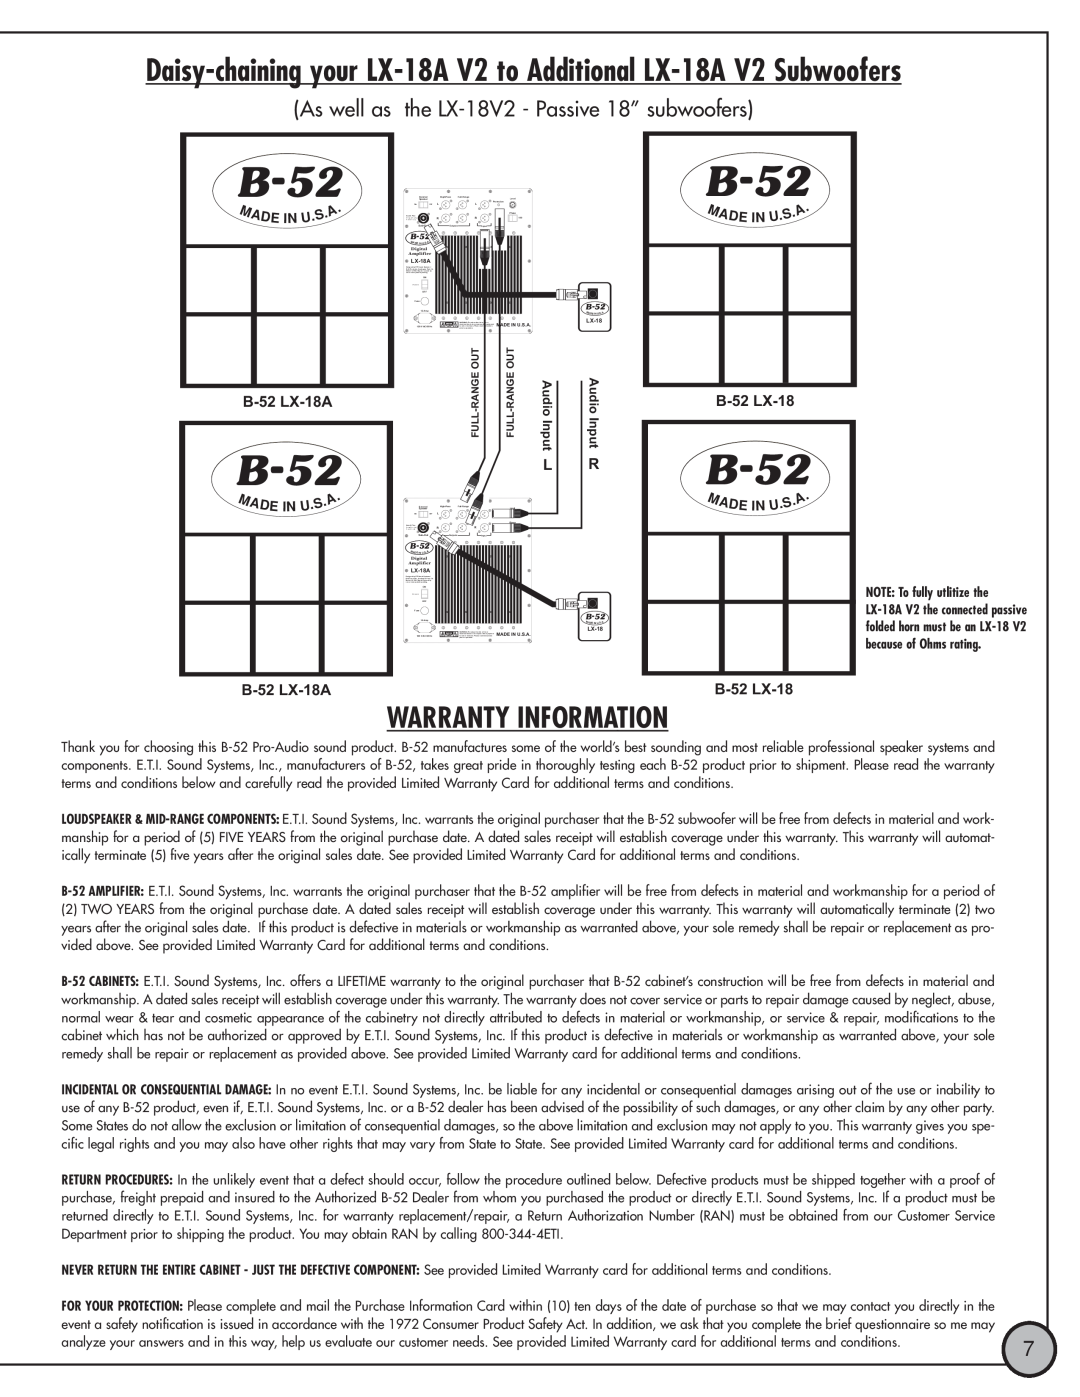 ETI Sound Systems, INC LX18A V2 manual Warranty Information, B-52 LX-18A, De In U, AudionputI 